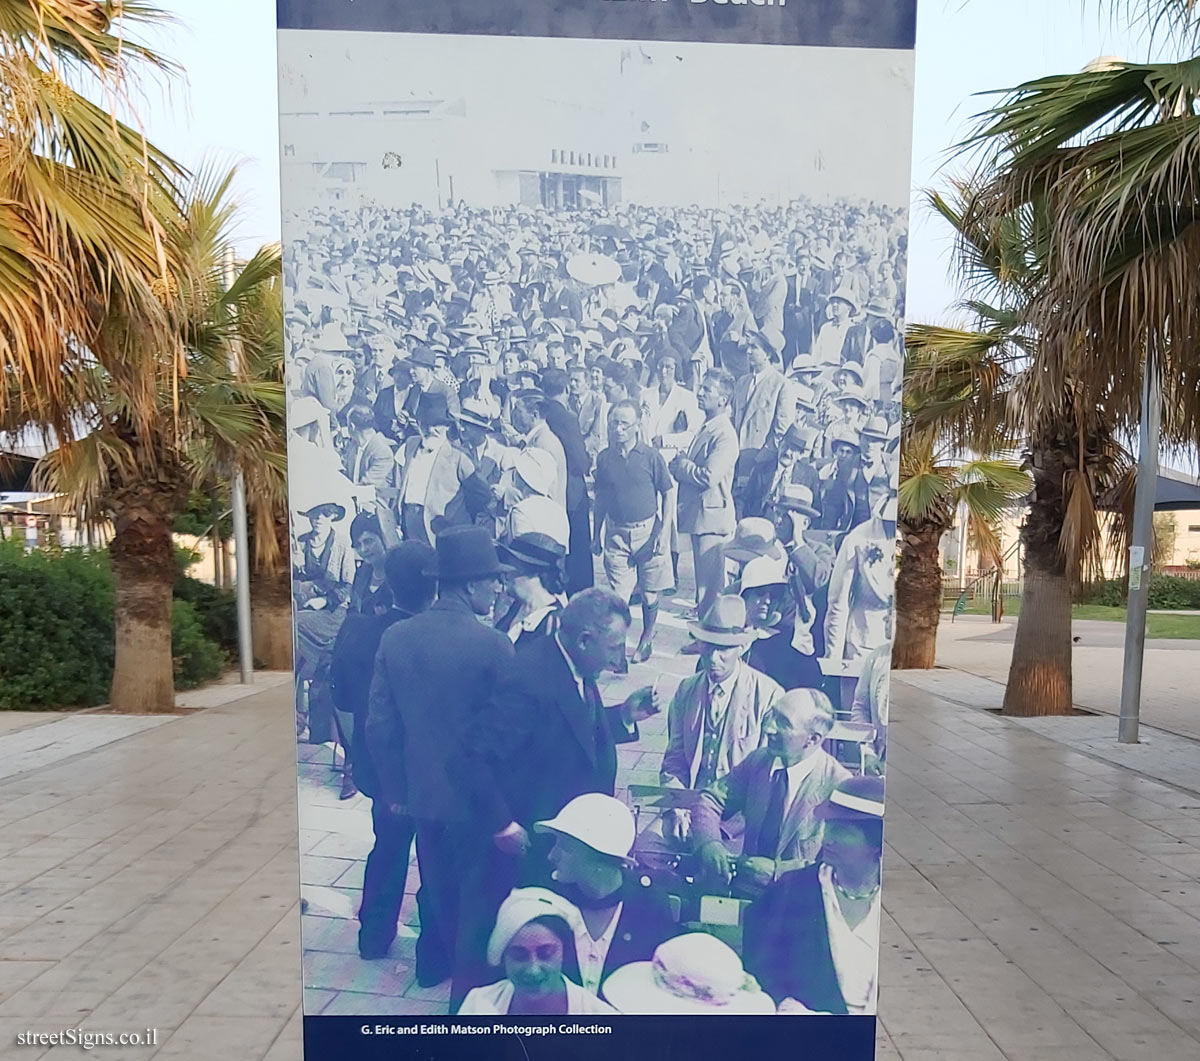 Tel Aviv - Levant Fair - Opening of the Levant Fair (2)